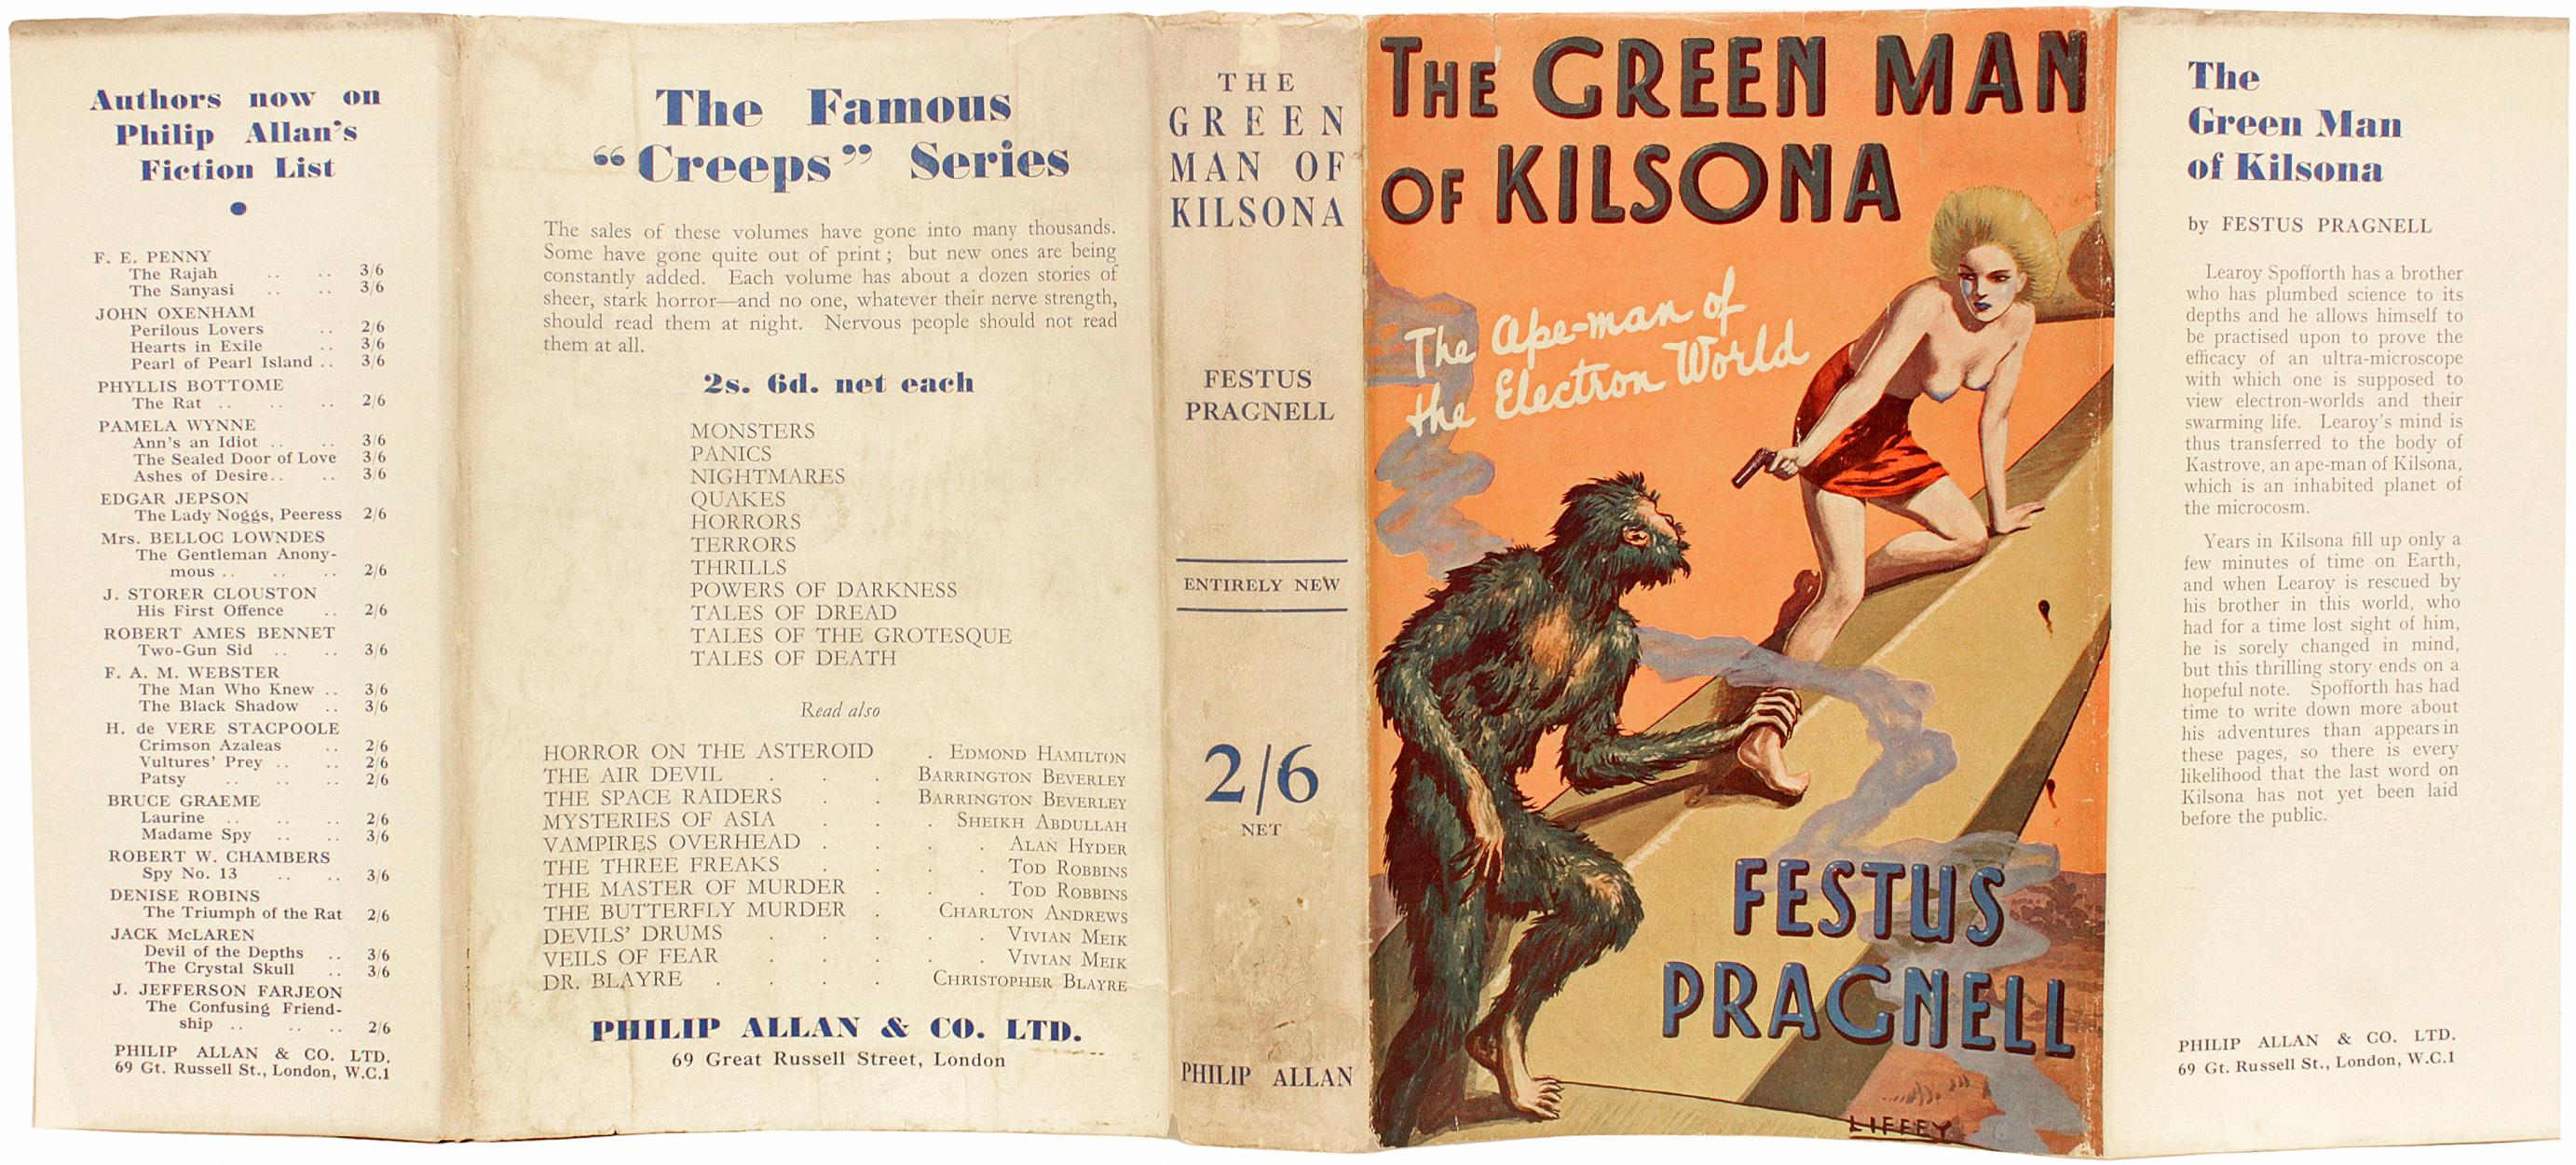 Festus Pragnell, the Green Man of Kilsona, First Edition Presentation Copy, 1936 For Sale 2